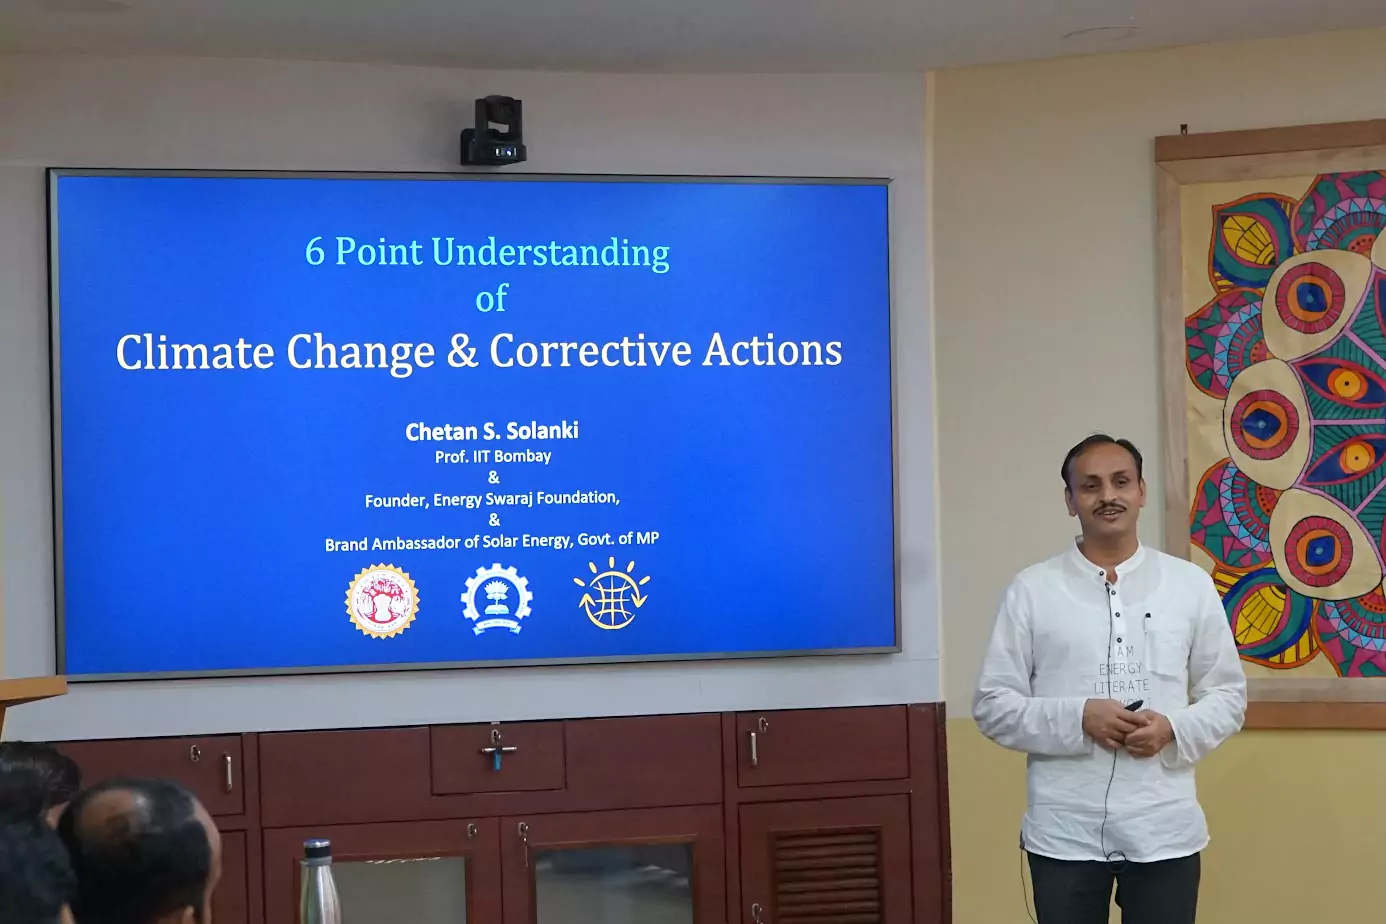 Invited Talk by IIT Bombay Prof Chetan Singh Solanki on Climate Change